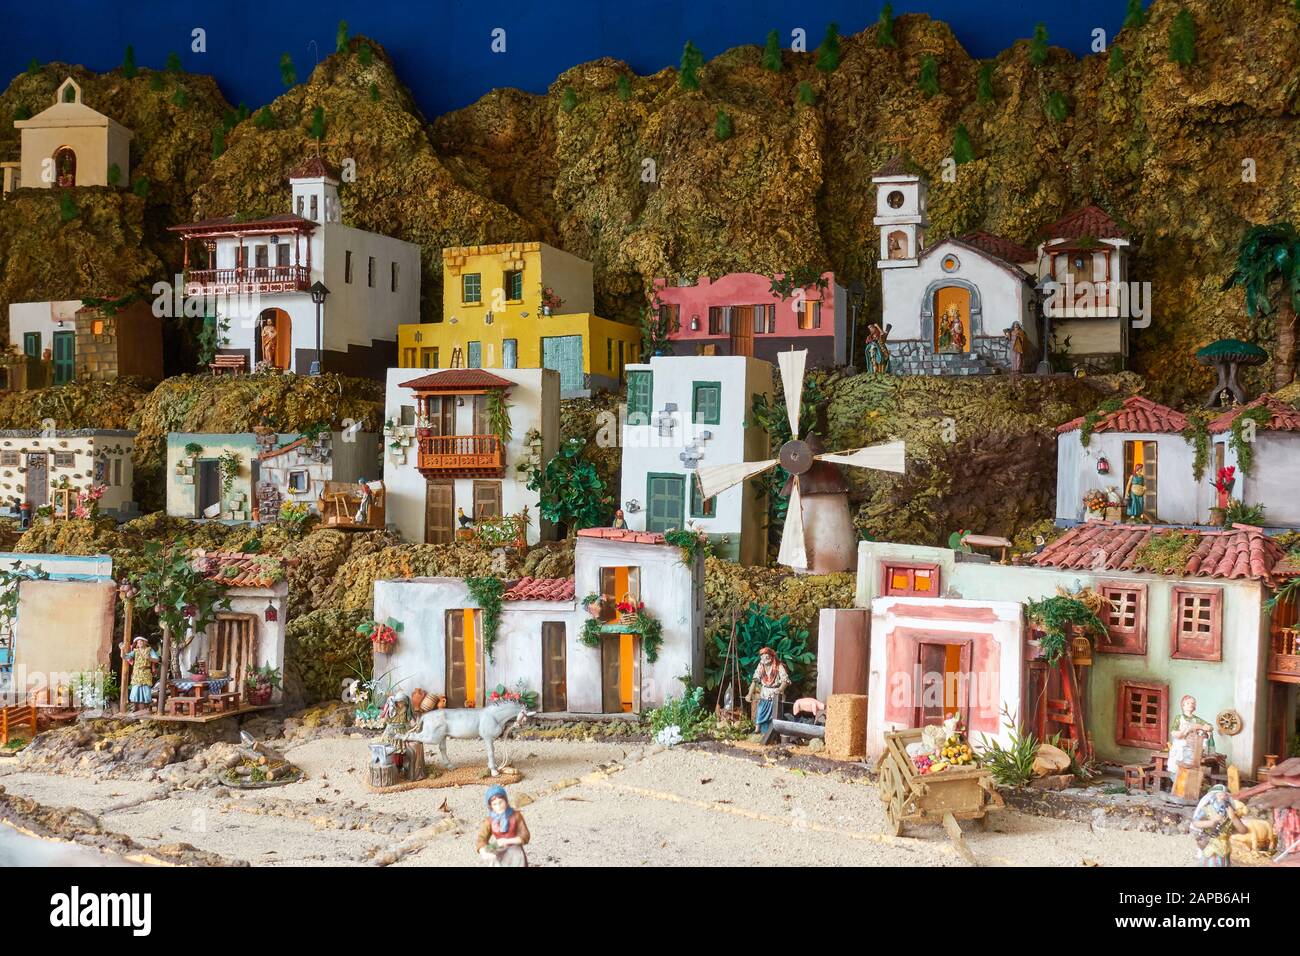 Candelaria, Tenerife, Spagna - 12 dicembre 2019: Belen di Natale - Creche (presepe), statuetta di persone e case in miniatura Foto Stock